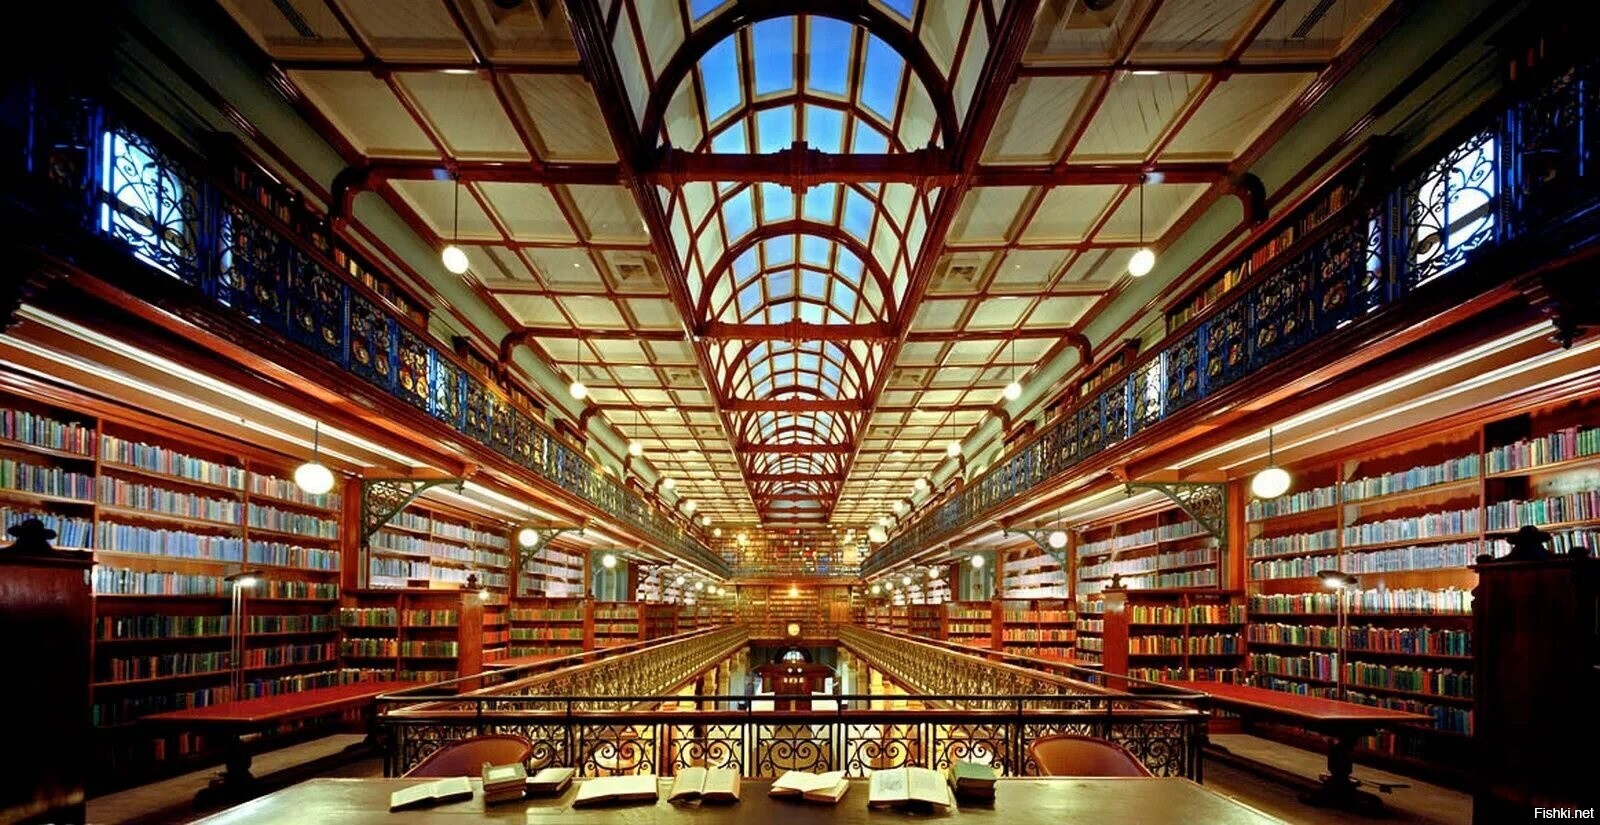 State library. Библиотека в Мюнхене. Баварская библиотека в Мюнхене. Библиотека университета Мюнхена. Национальная библиотека Австралии.